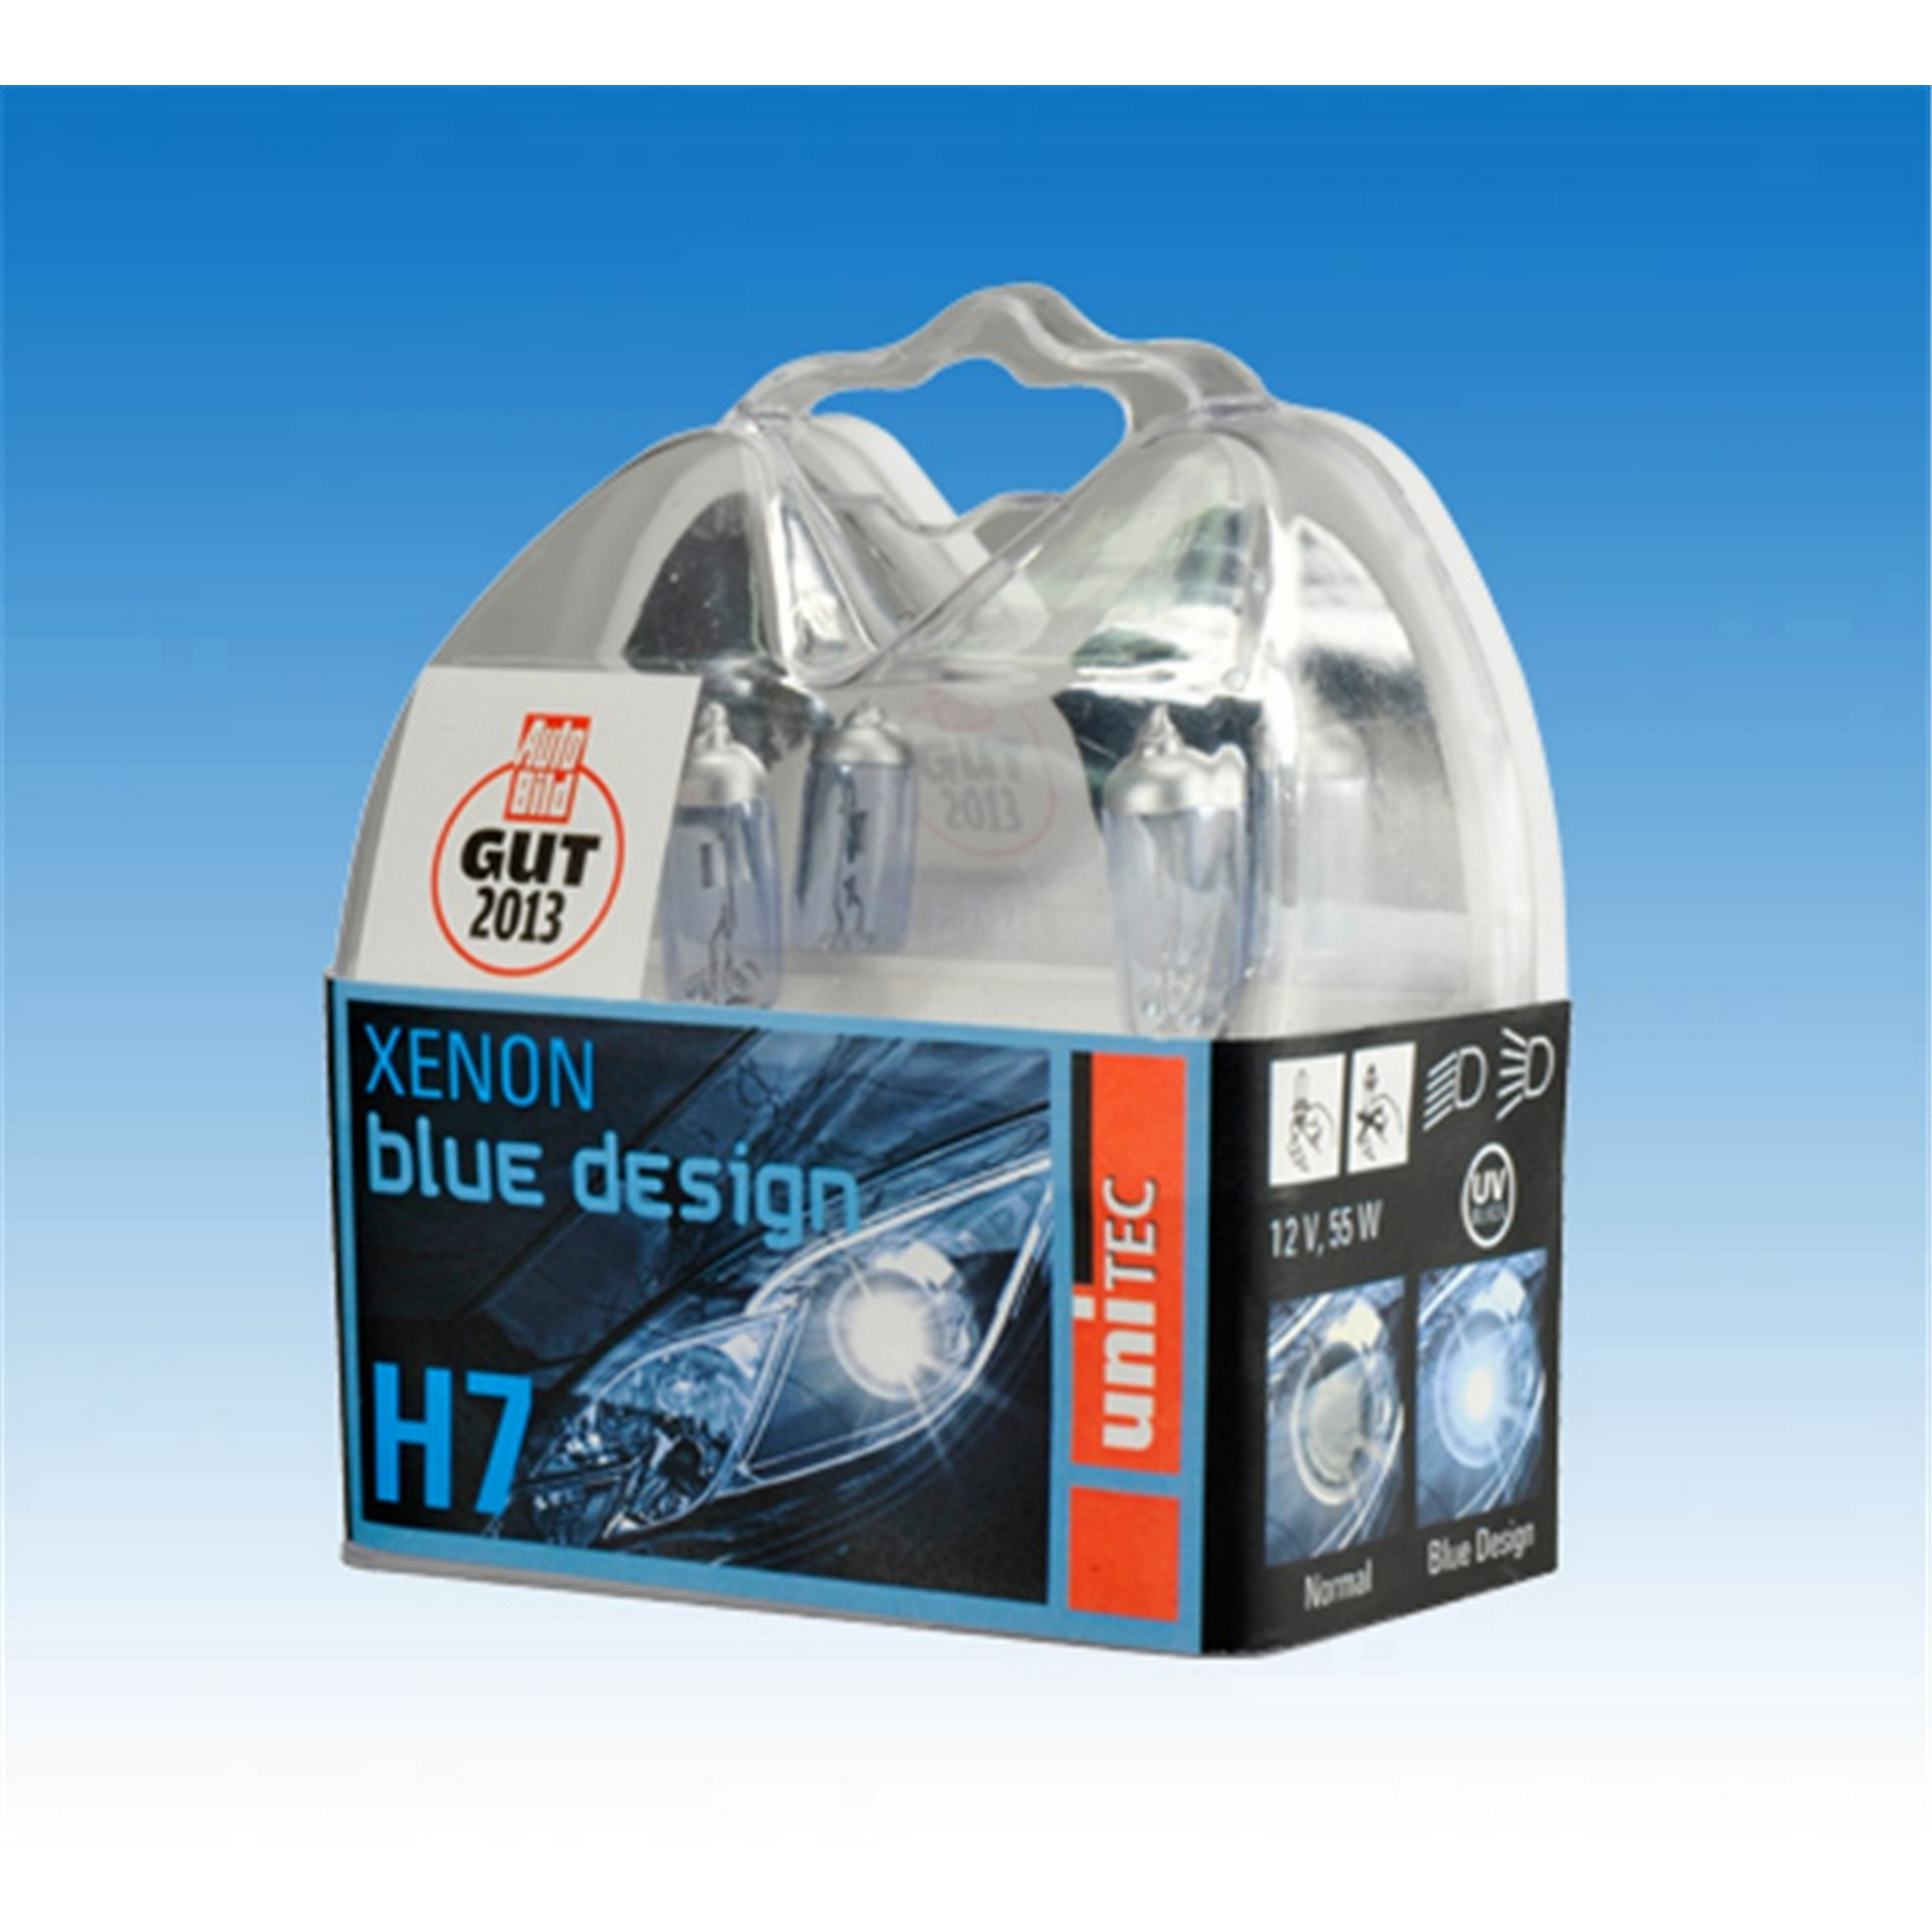 H7 XENON Blue Design 2er Set + product picture